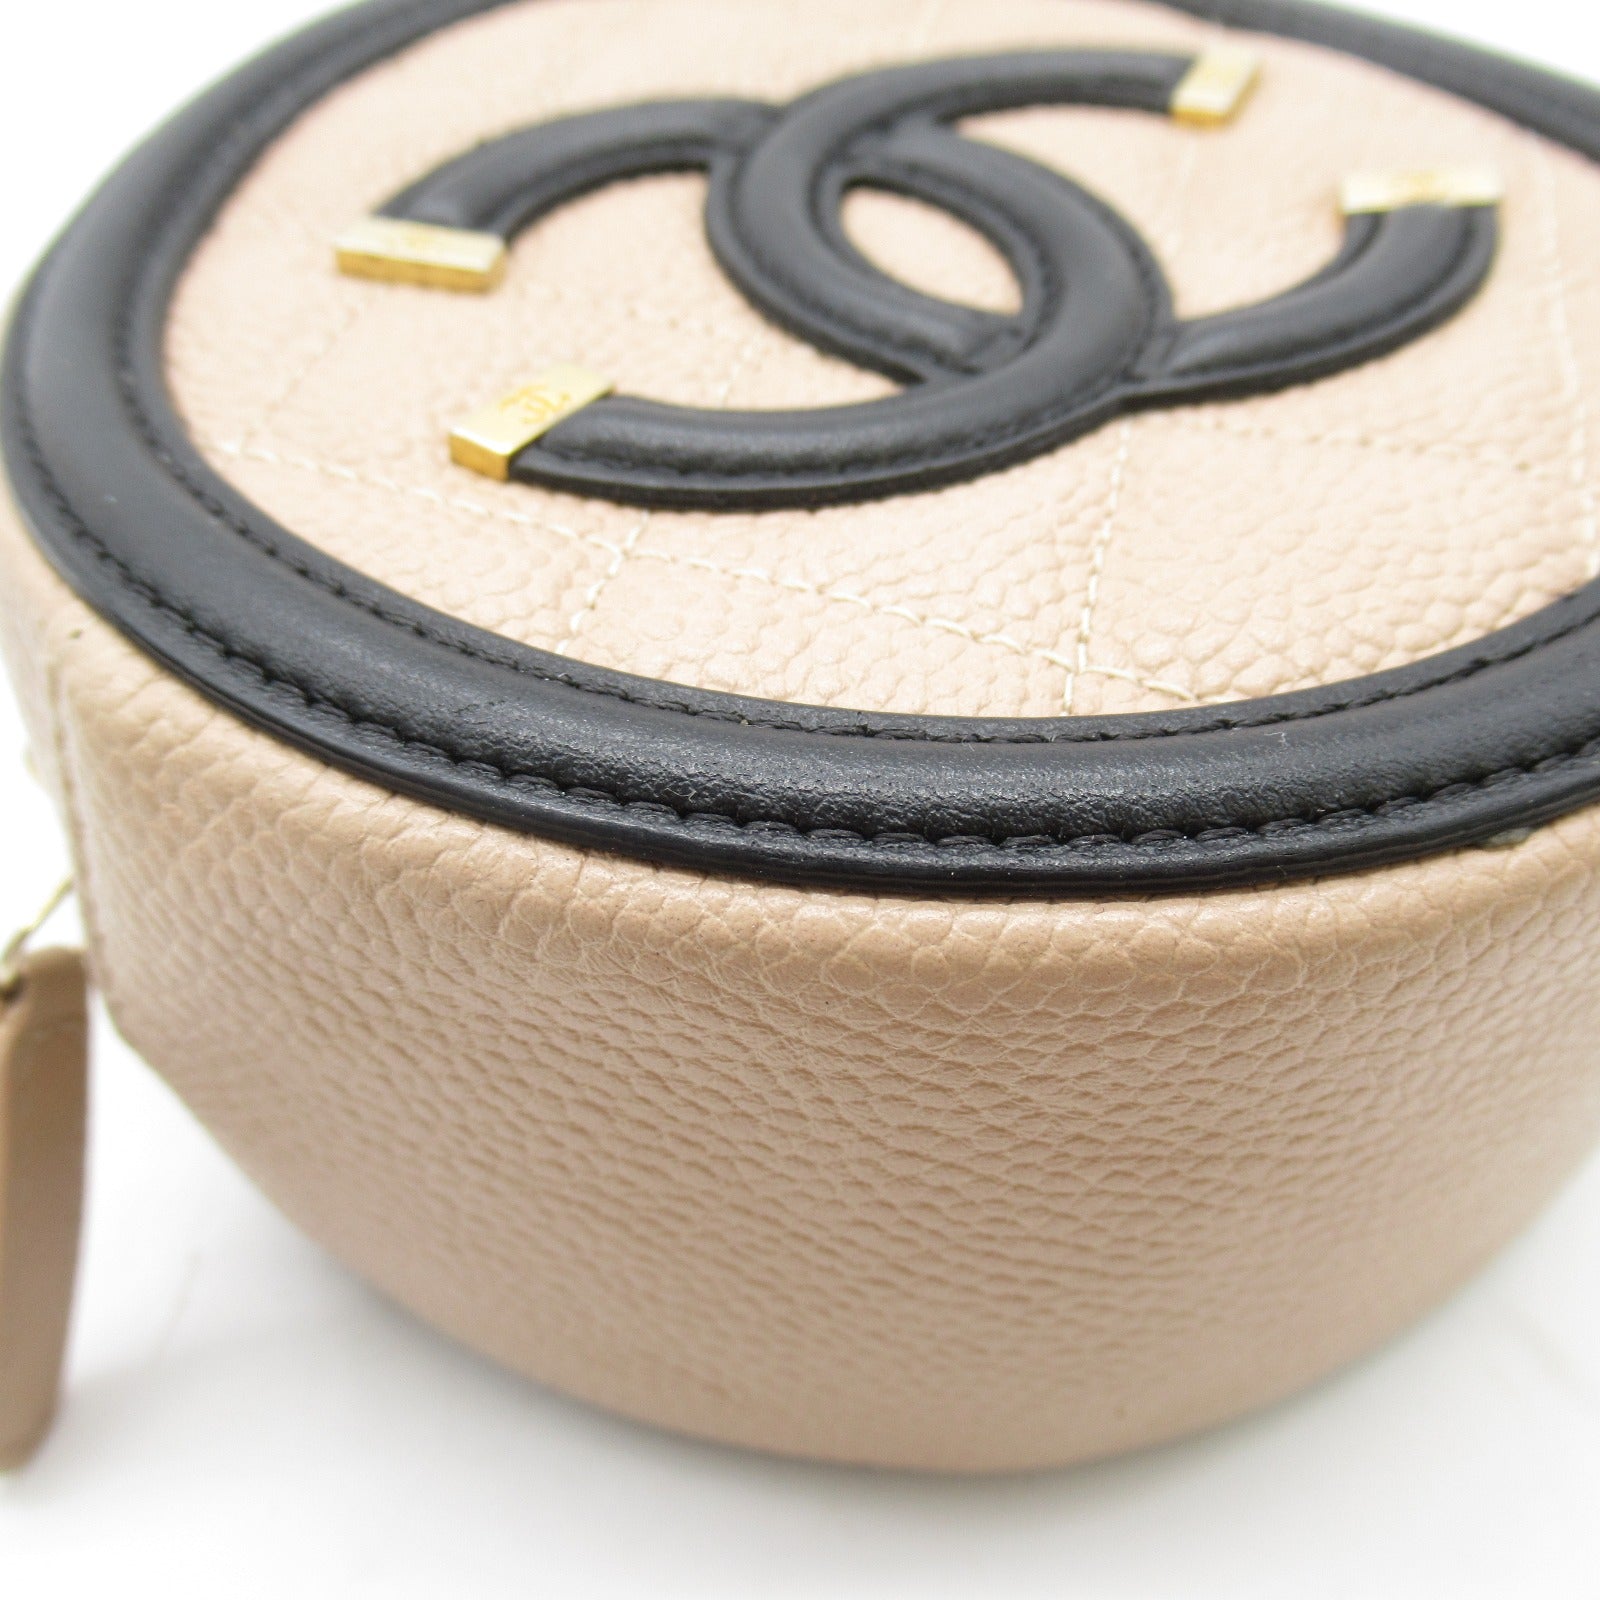 CHANEL CHANEL Chain Pochette Shoulder Bag Caviar S  Beige / Black